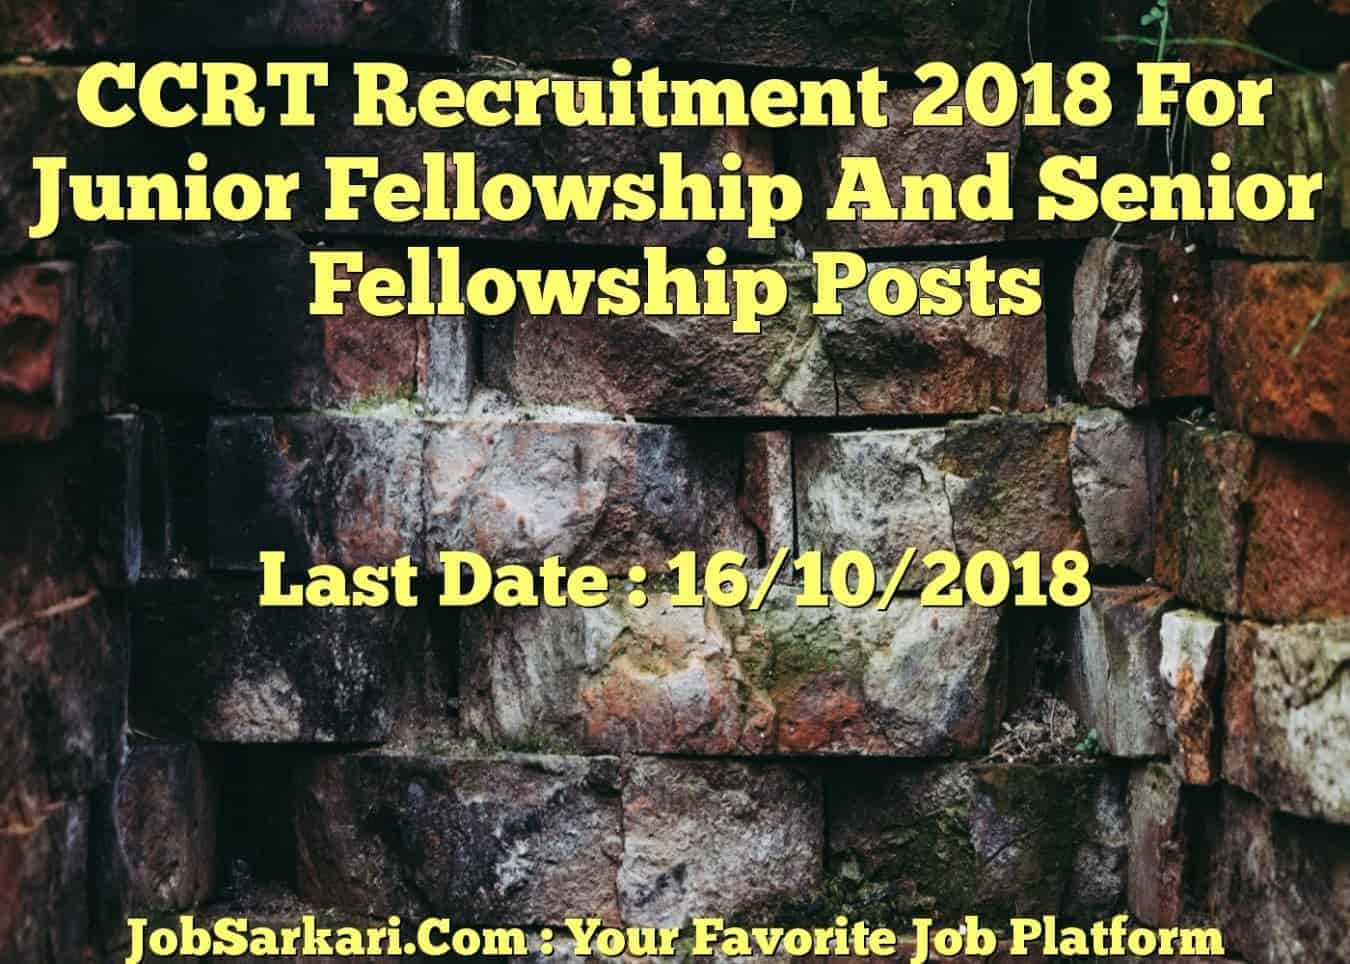 CCRT Recruitment 2018 For Junior Fellowship And Senior Fellowship Posts